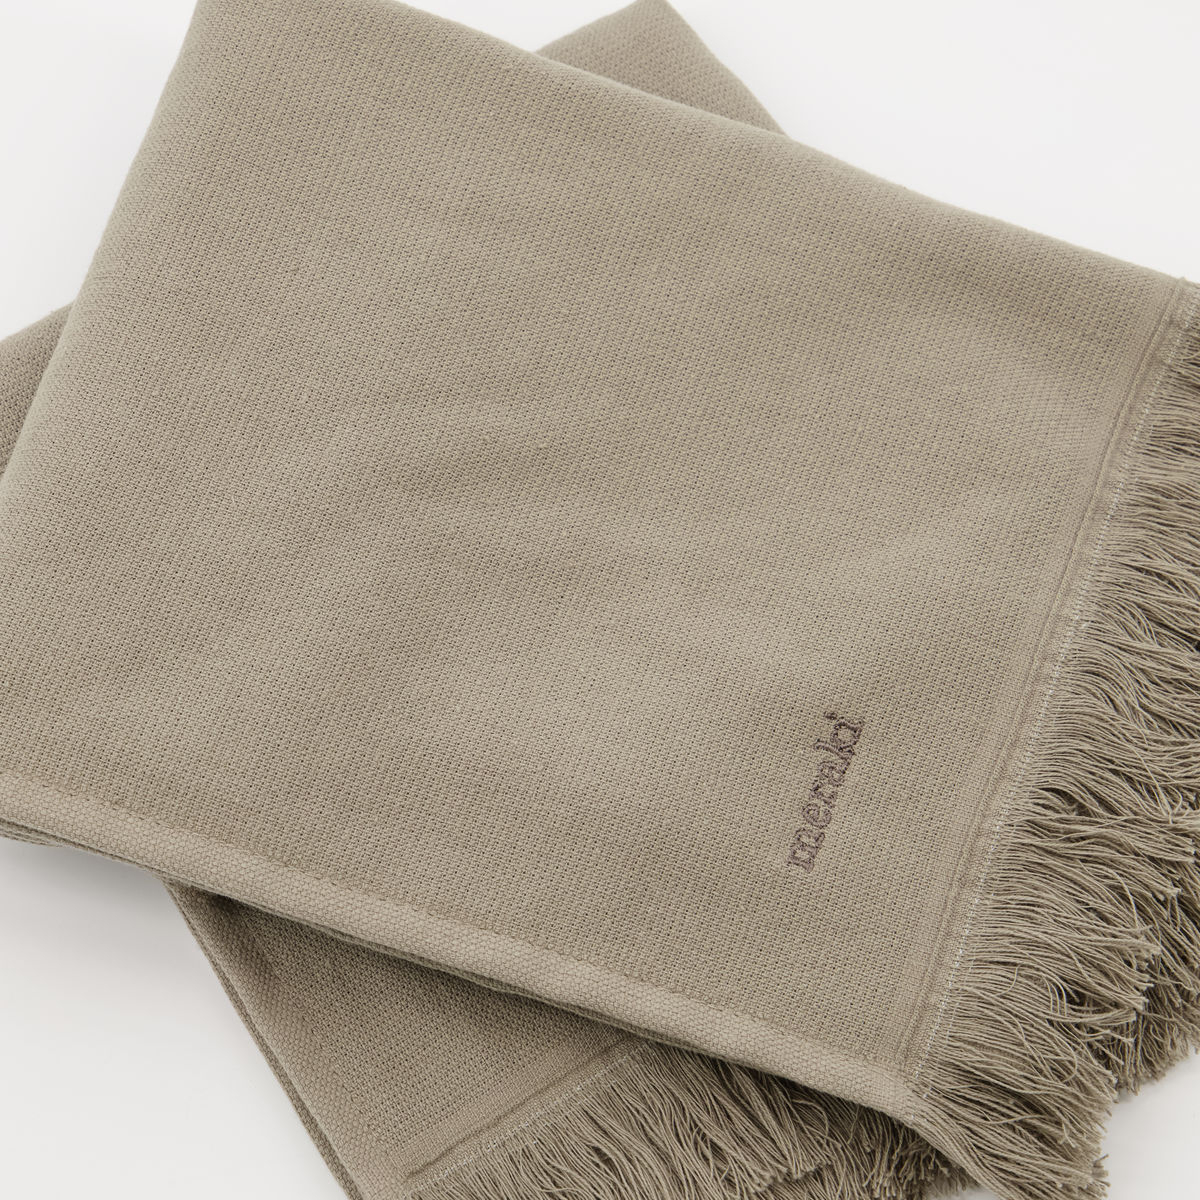 Håndklæde, Lunaria, Varm grå 40x60 cm, 2 stk